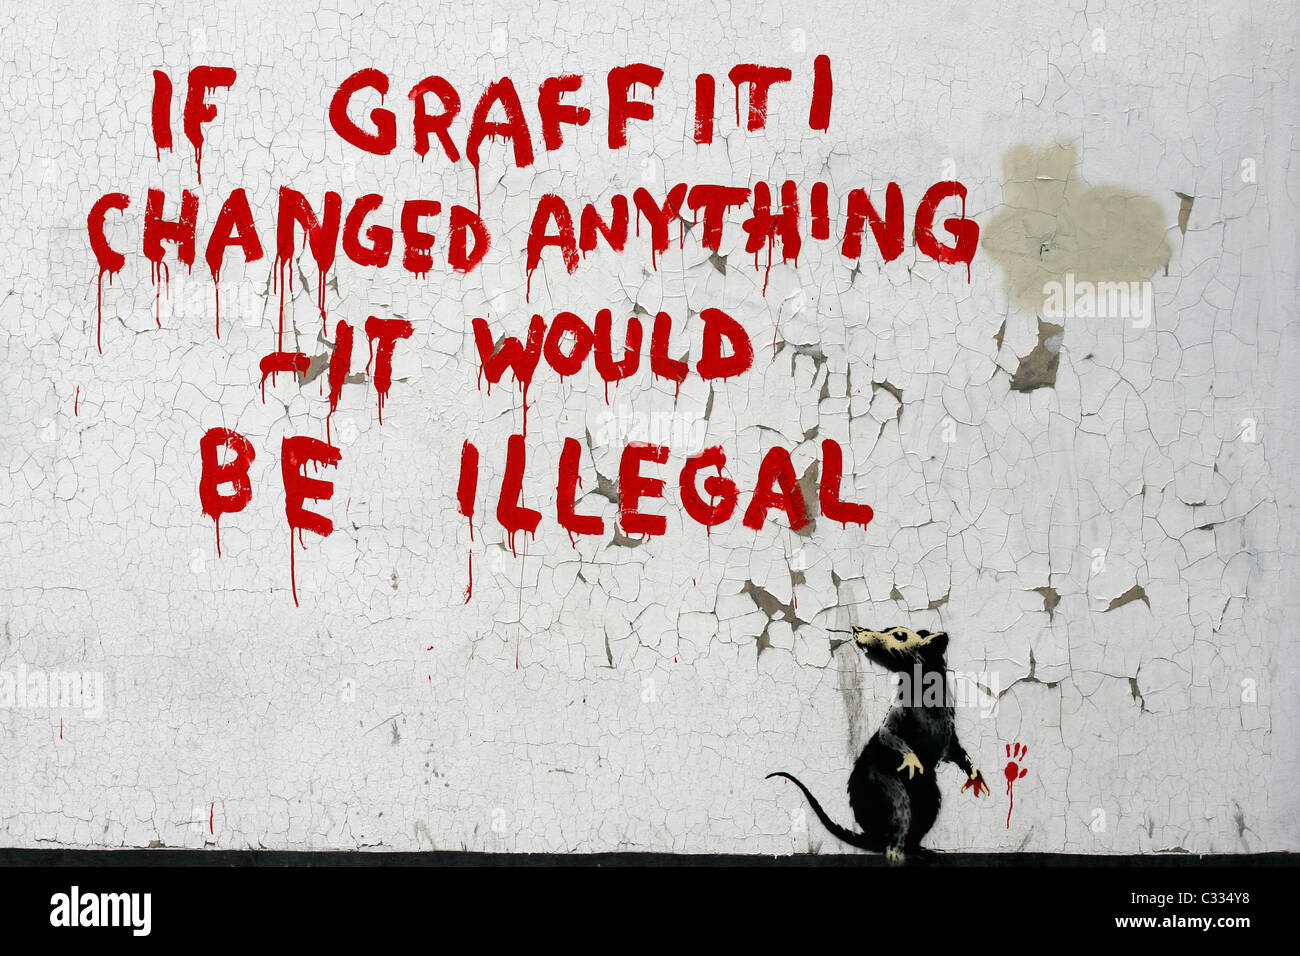 Banksy Graffiti on a London wall, If graffiti changed anything - it would be illegal Stock Photo